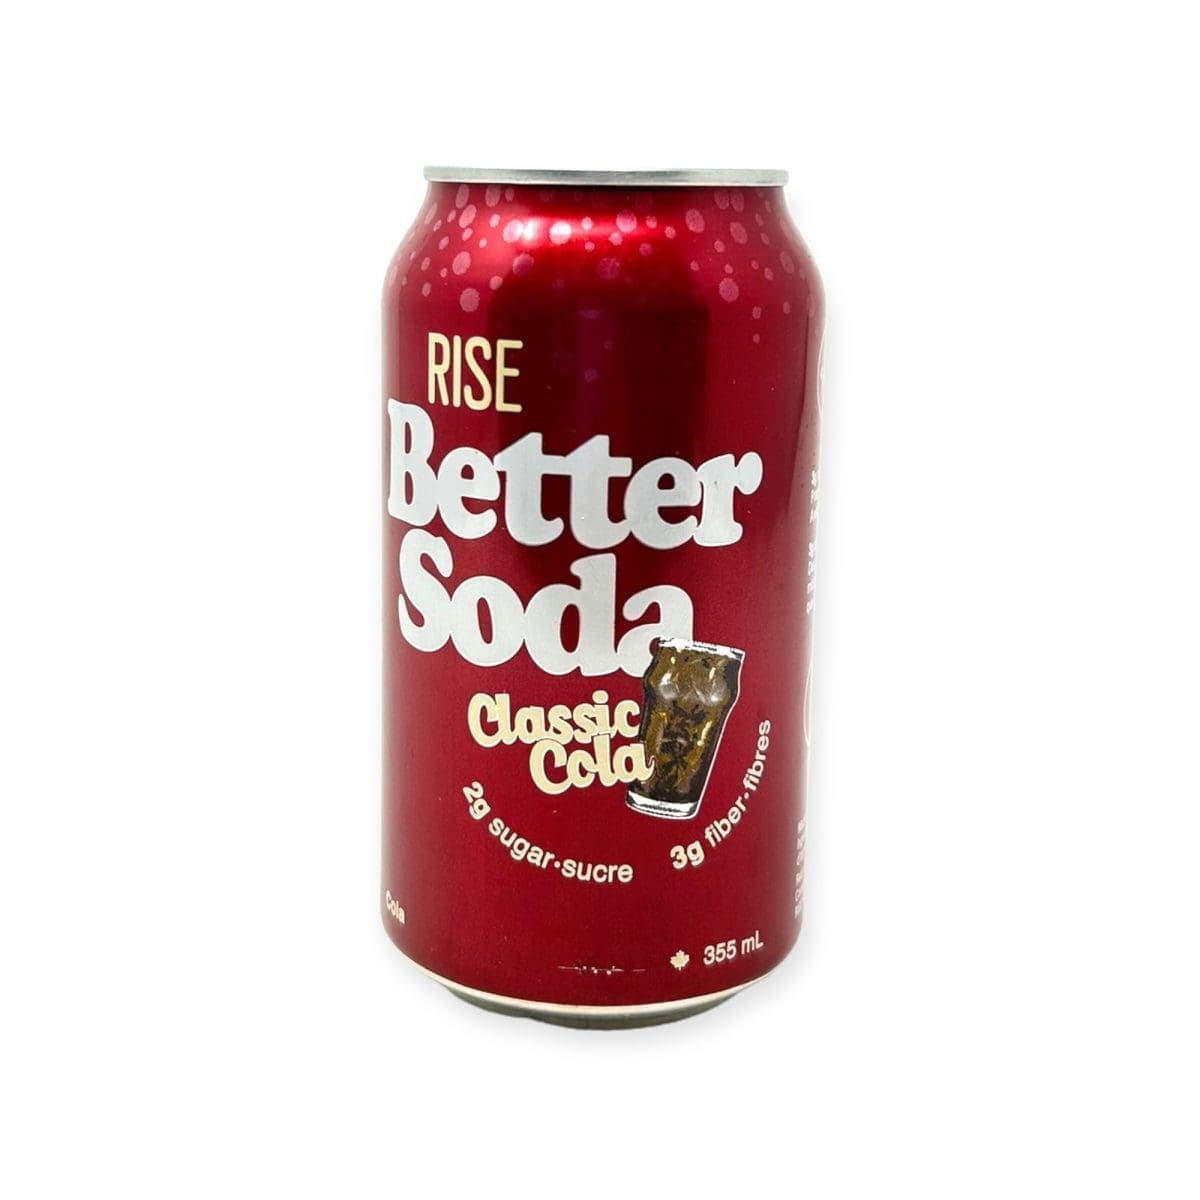 Rise Better Soda Classic Cola (355mL)